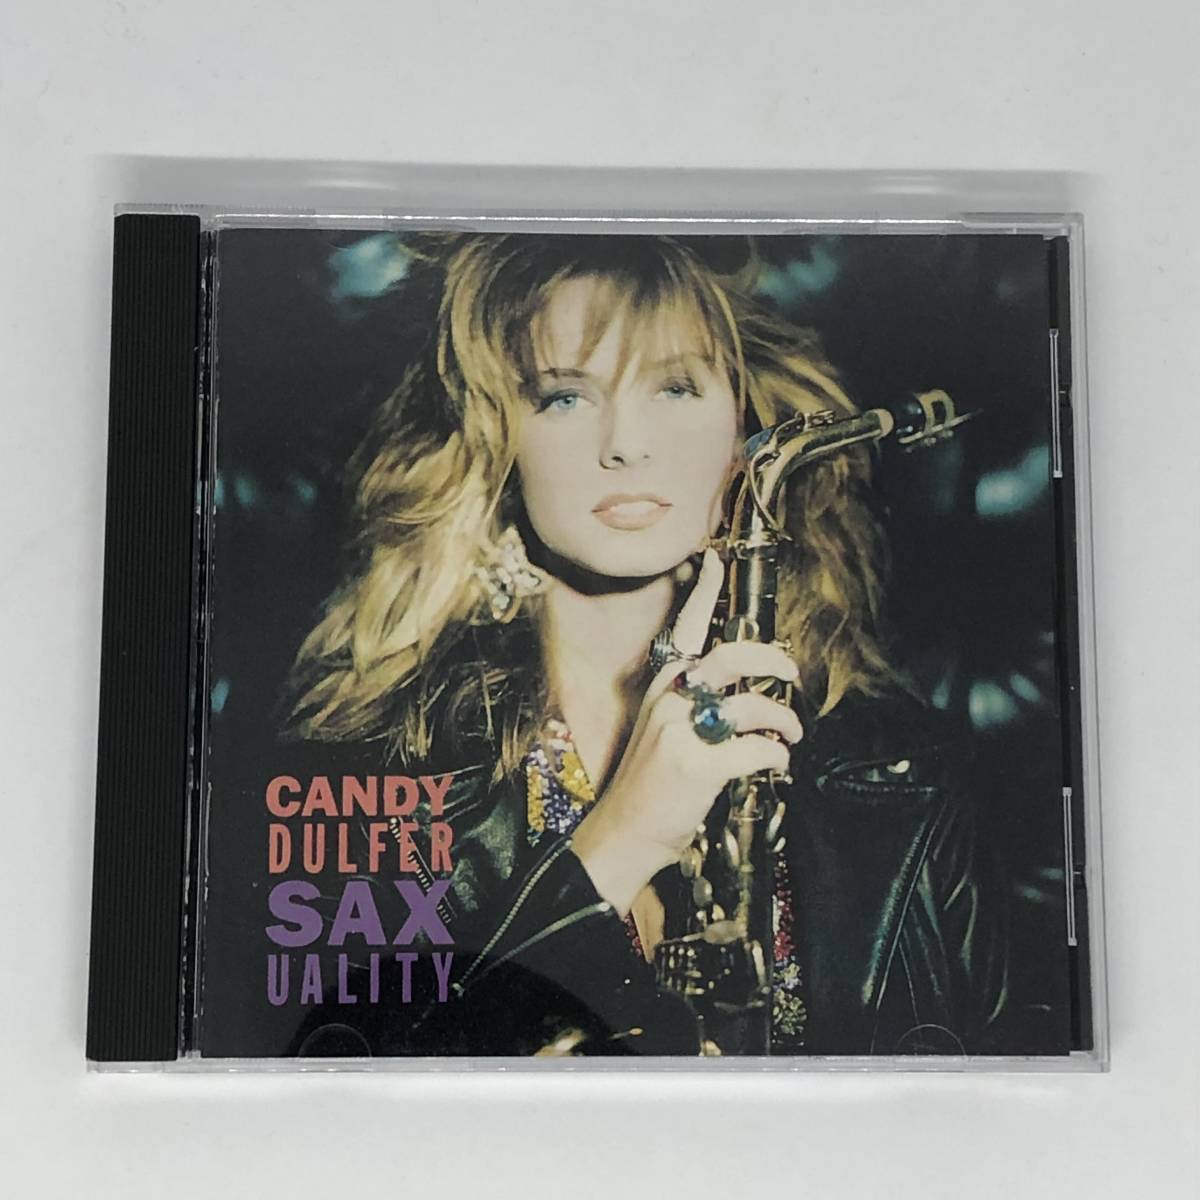 US盤 中古CD Candy Dulfer Saxuality キャンディ・ダルファー サクシュアリティ Arista ARCD-8674 個人所有_画像1